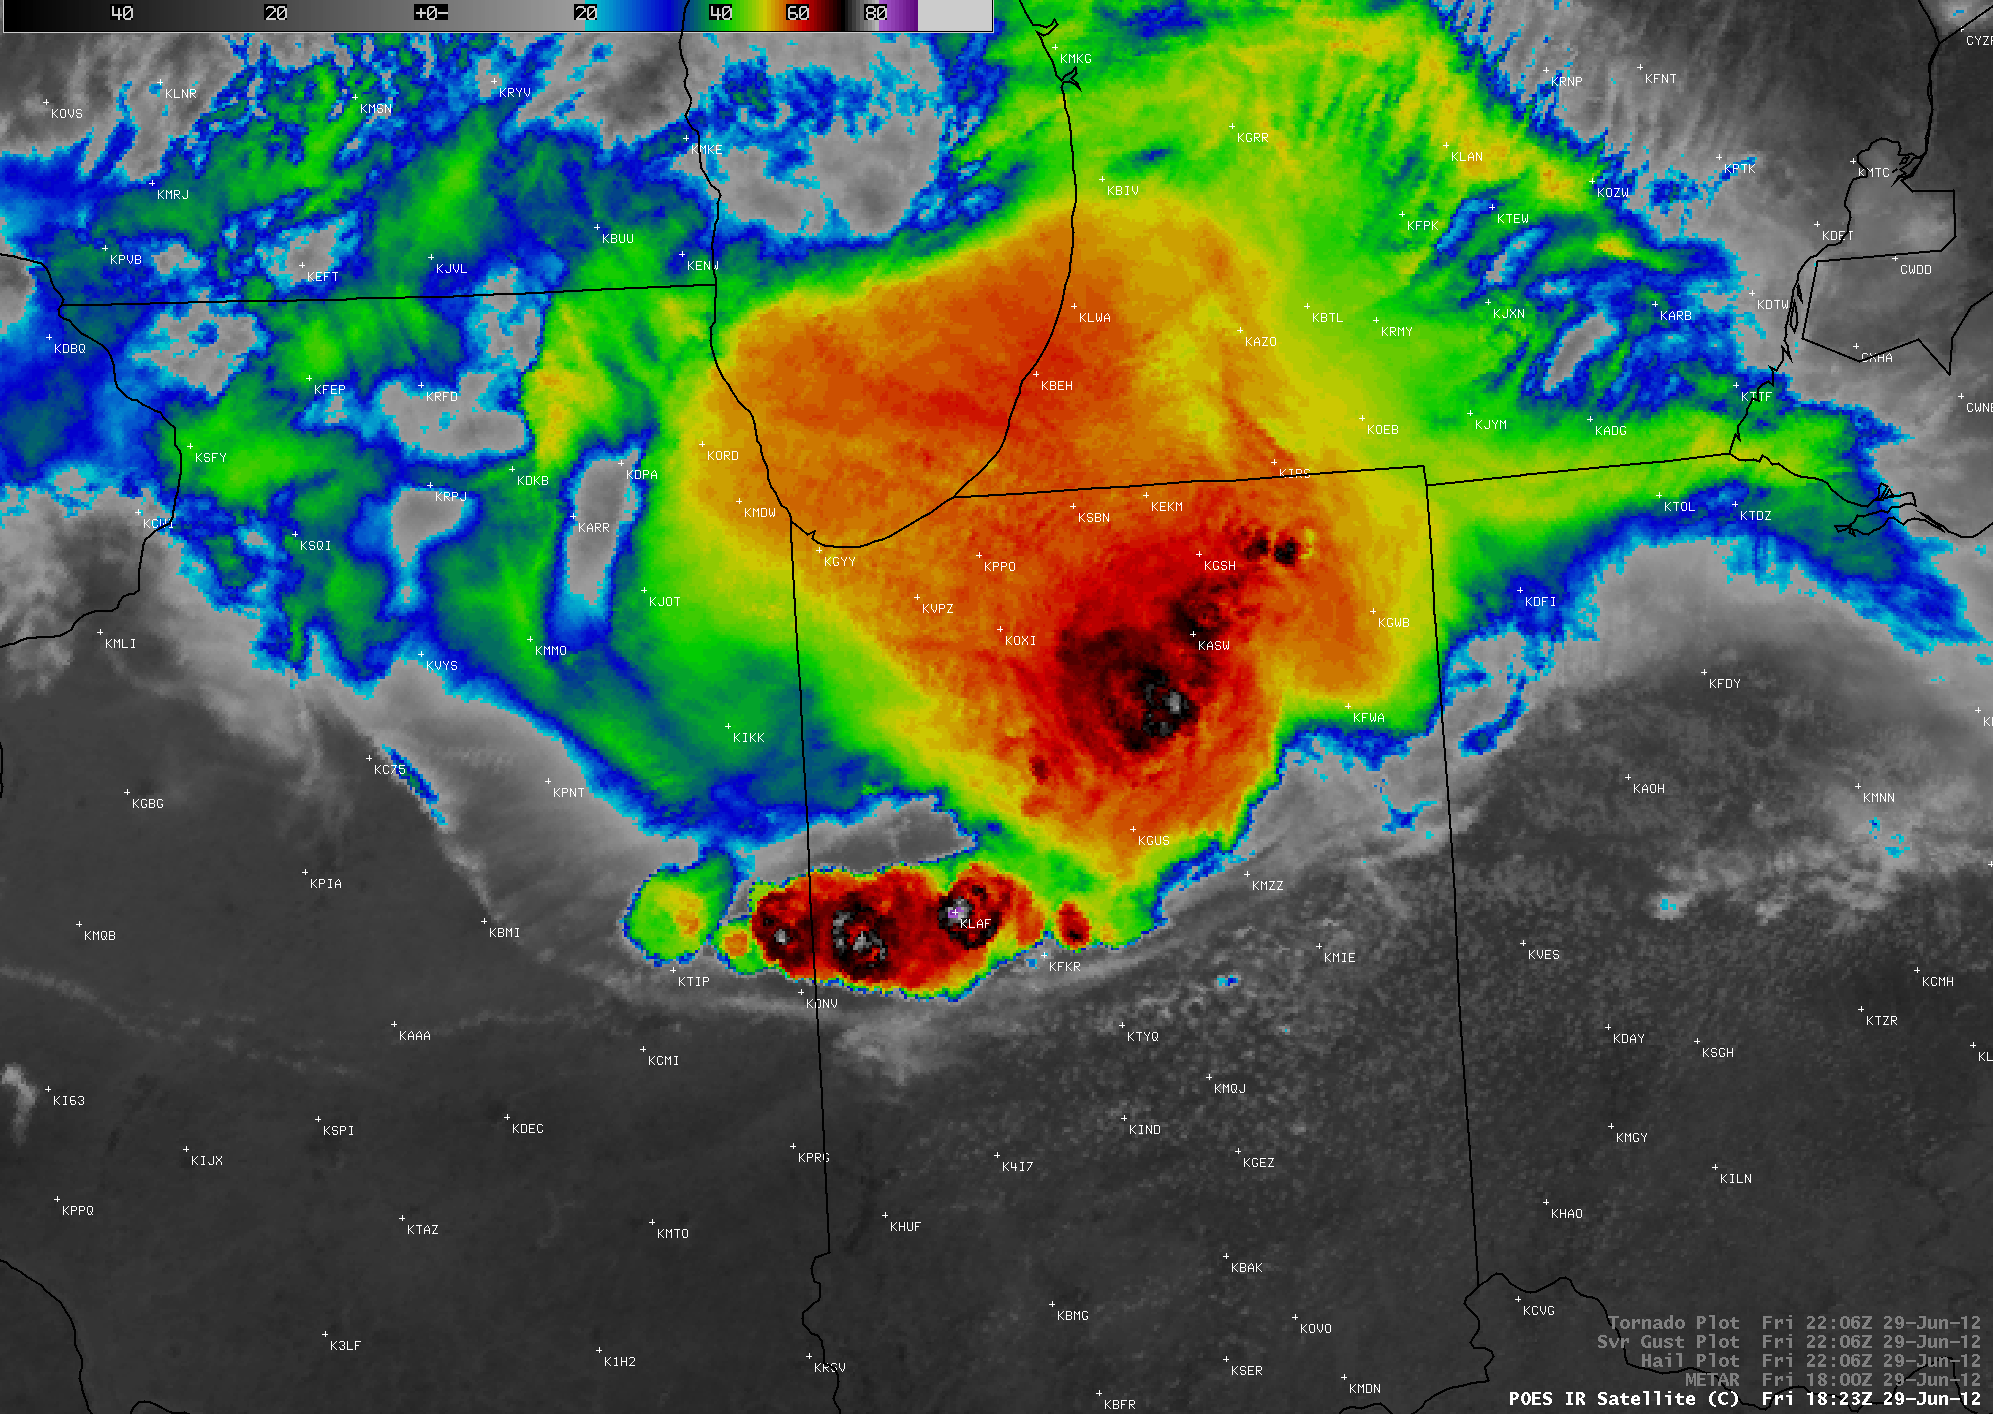 POES AVHRR 10.8 Âµm IR channel image + cumulative SPC storm reports